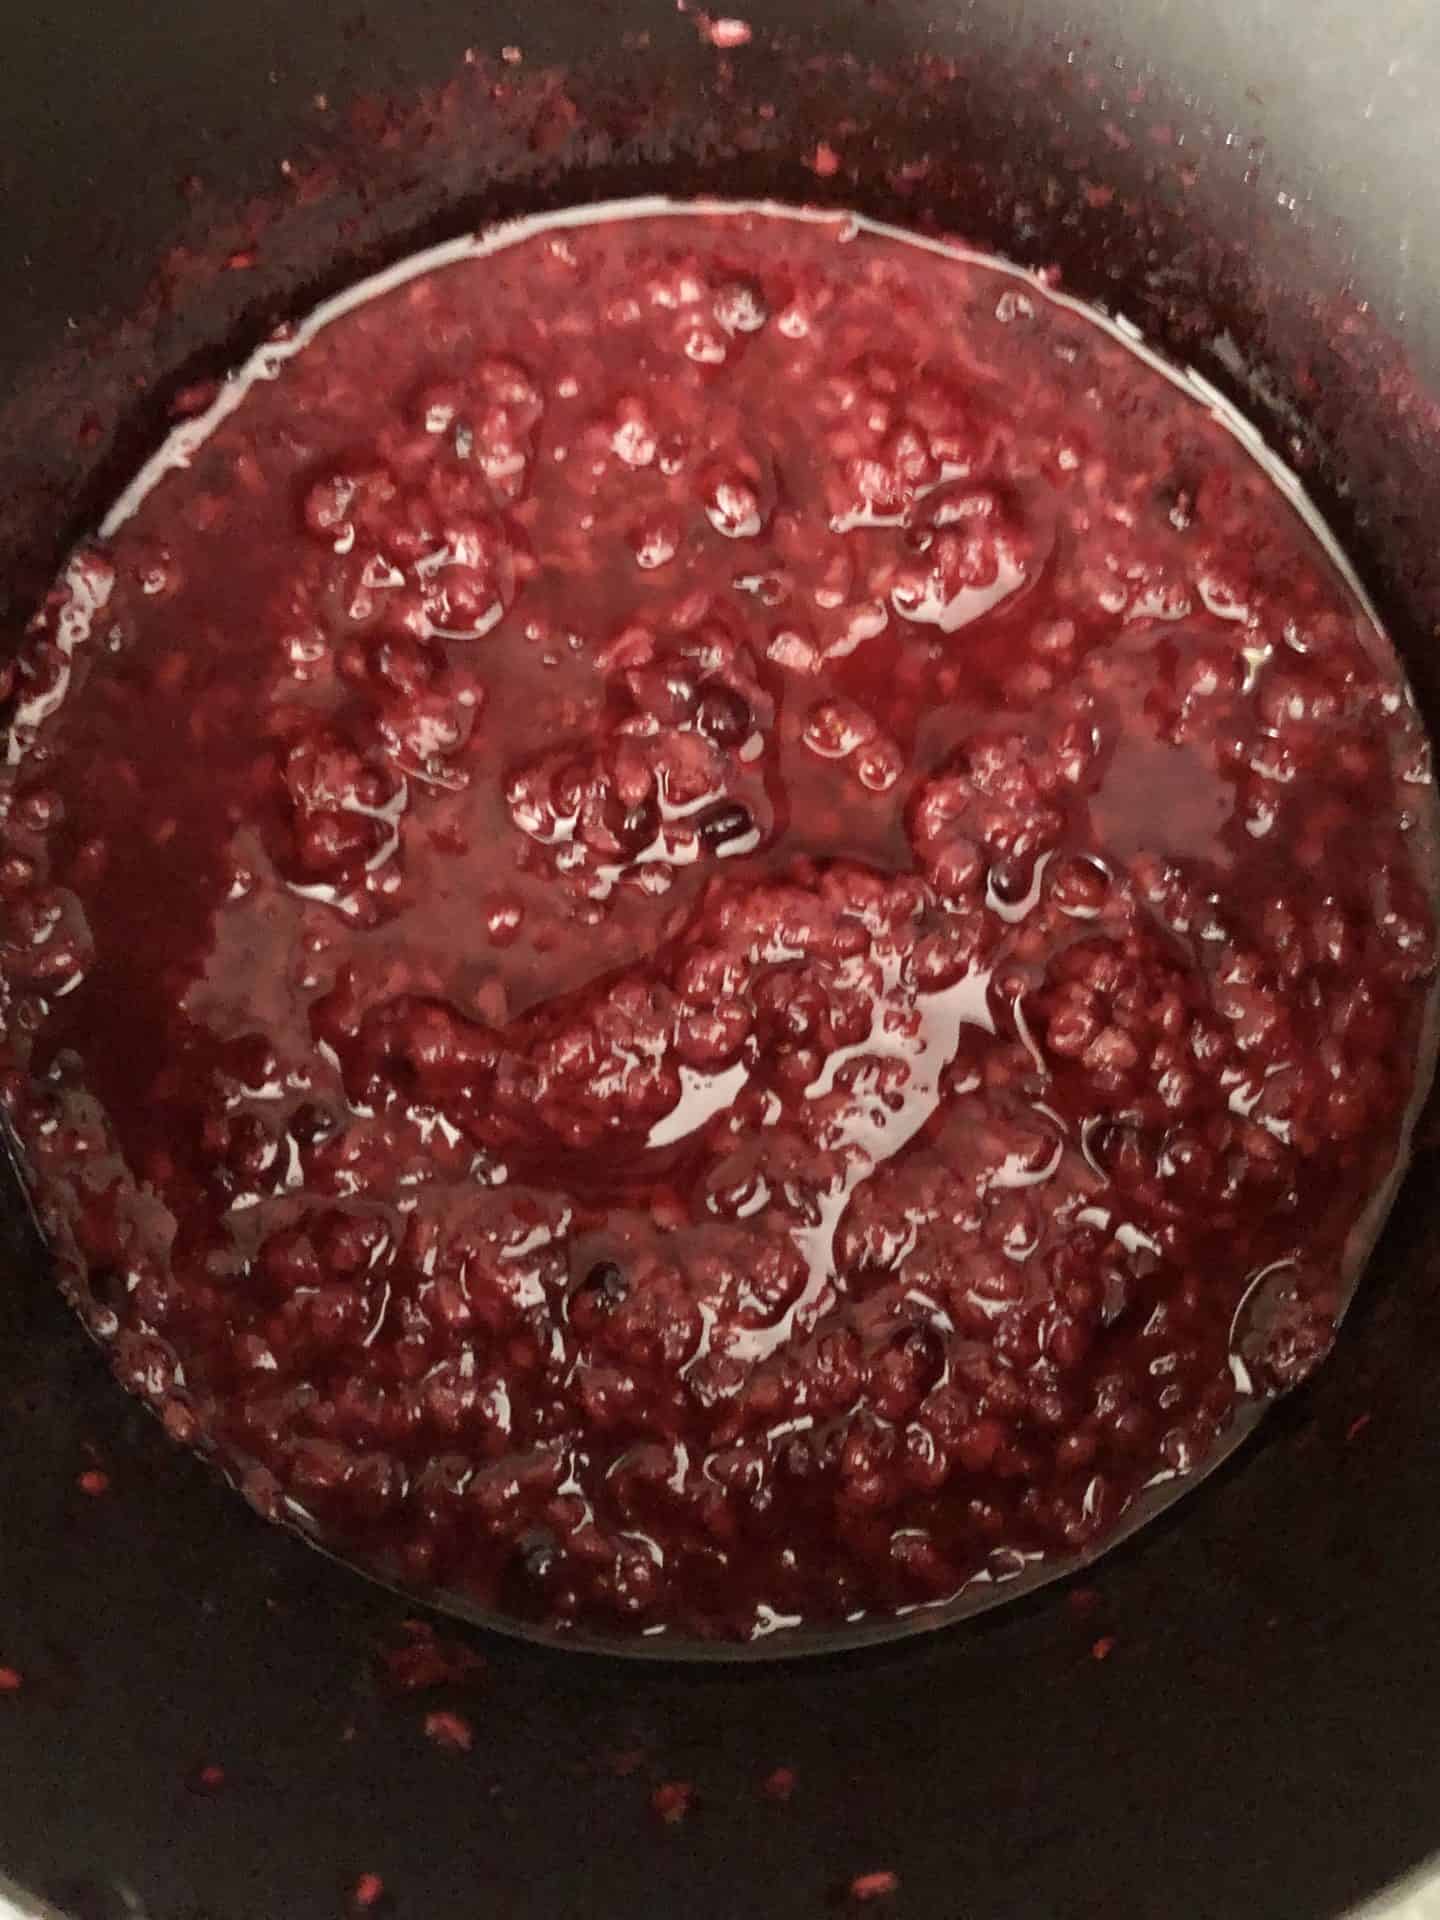 Raspberries and blackberries cooked down in pot 